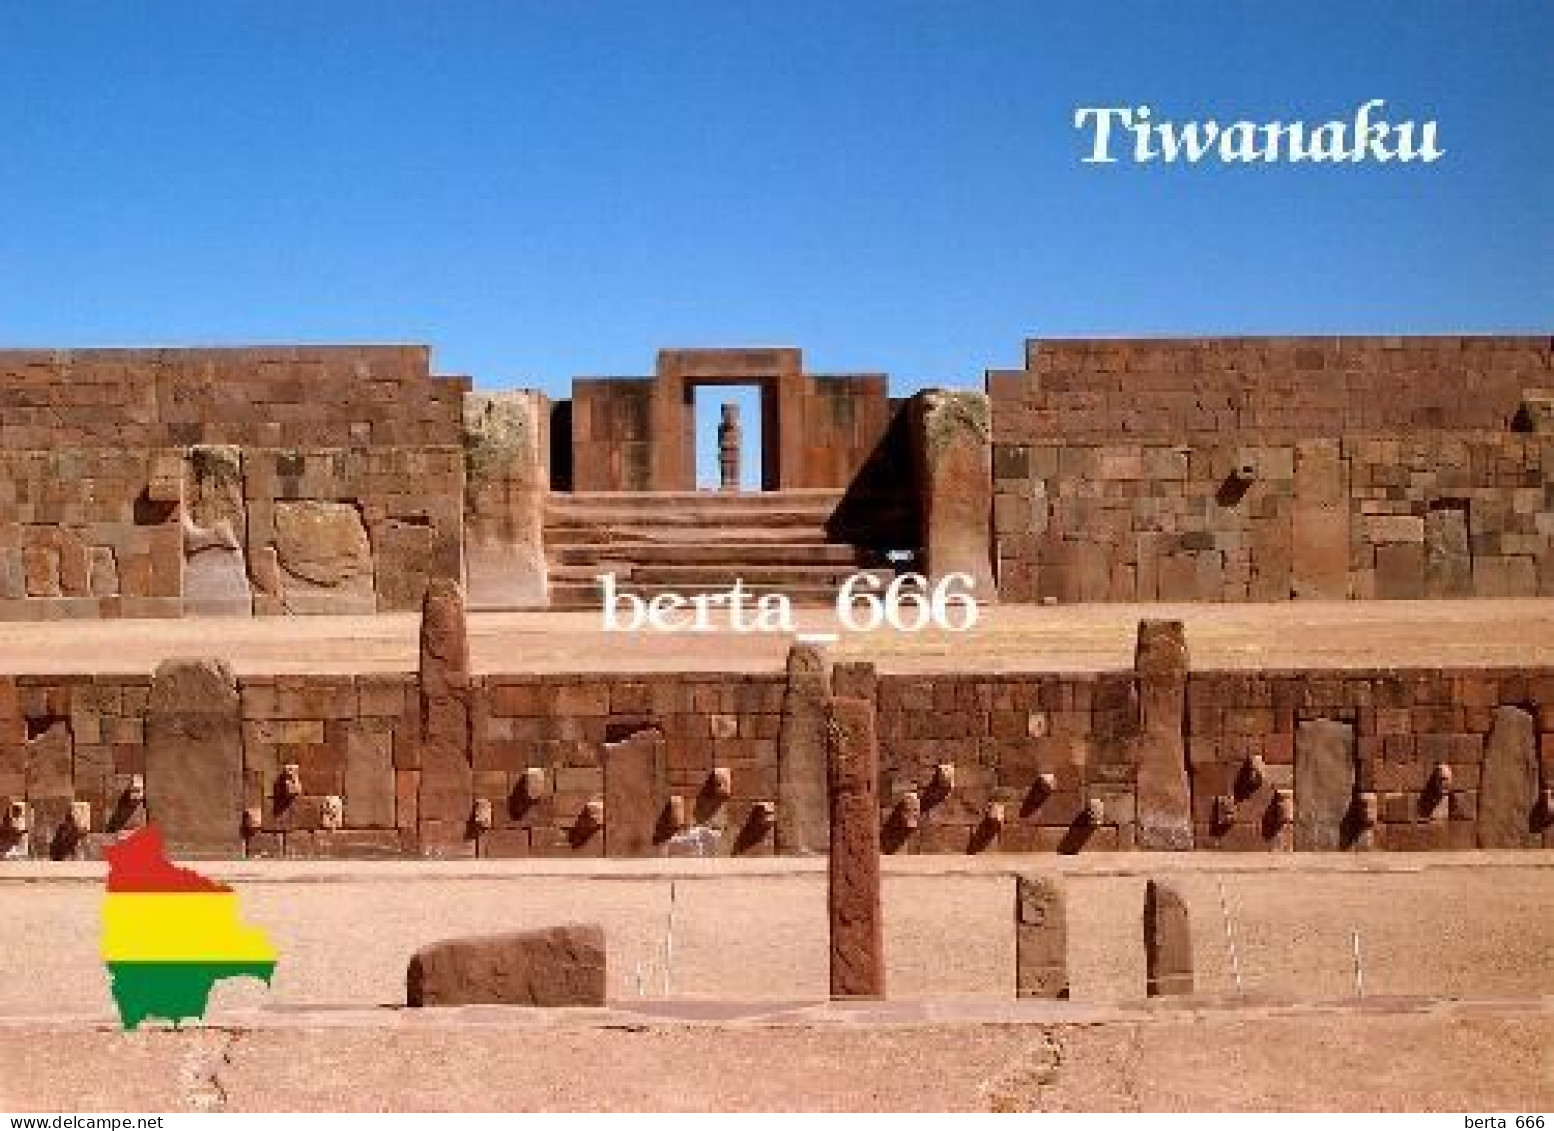 Bolivia Tiwanaku Archaeological Site UNESCO New Postcard - Bolivia